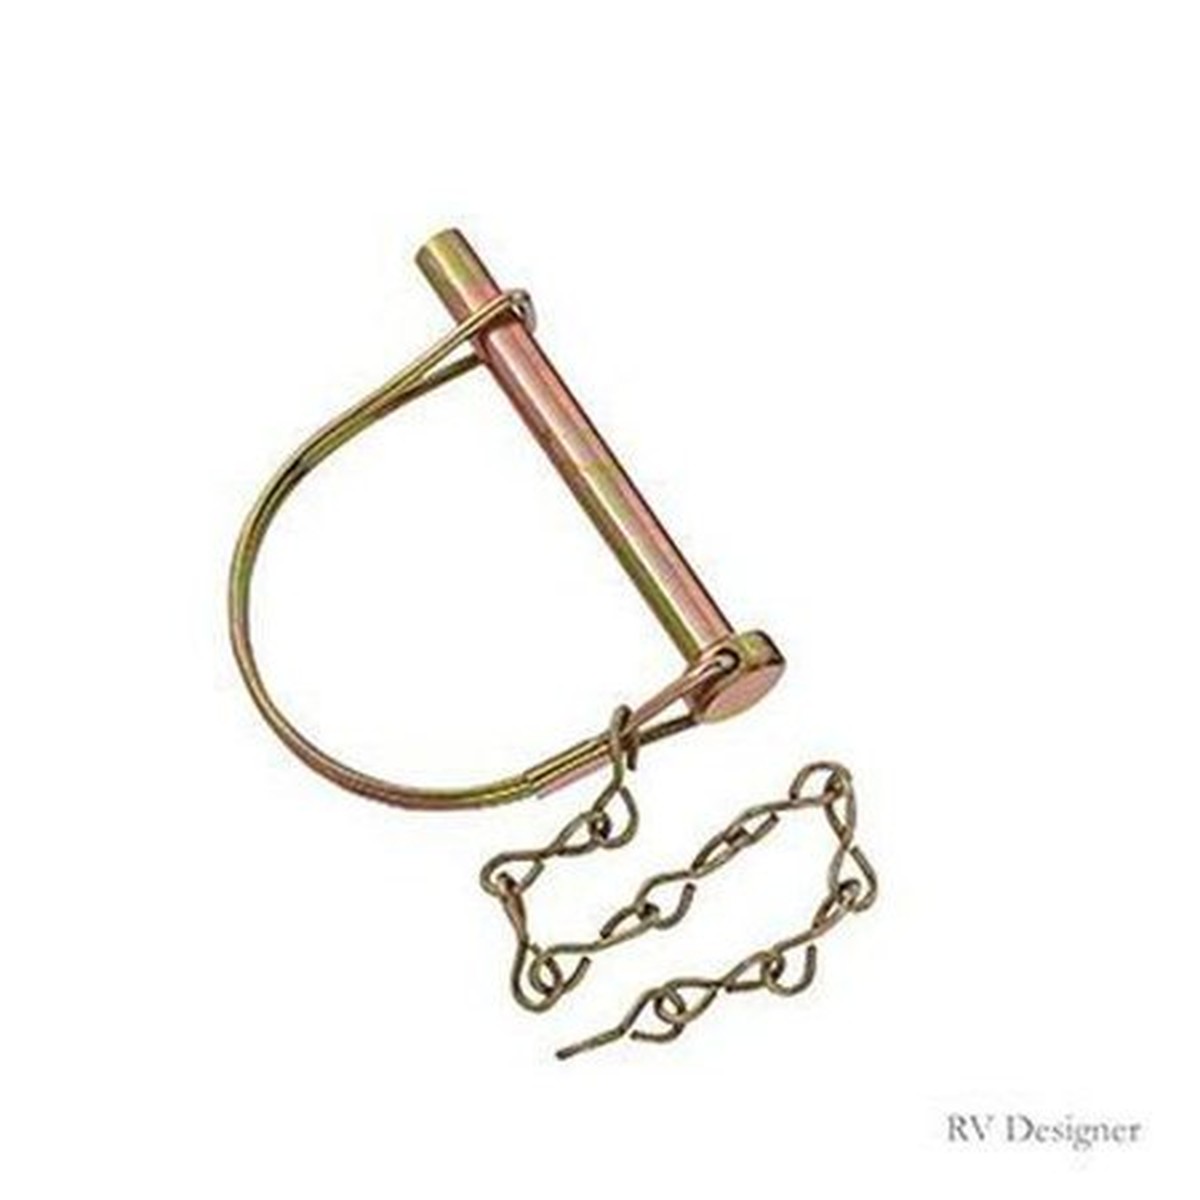 Coupler Lock Pin W/ Chain, 5/16In X 2-1/2In